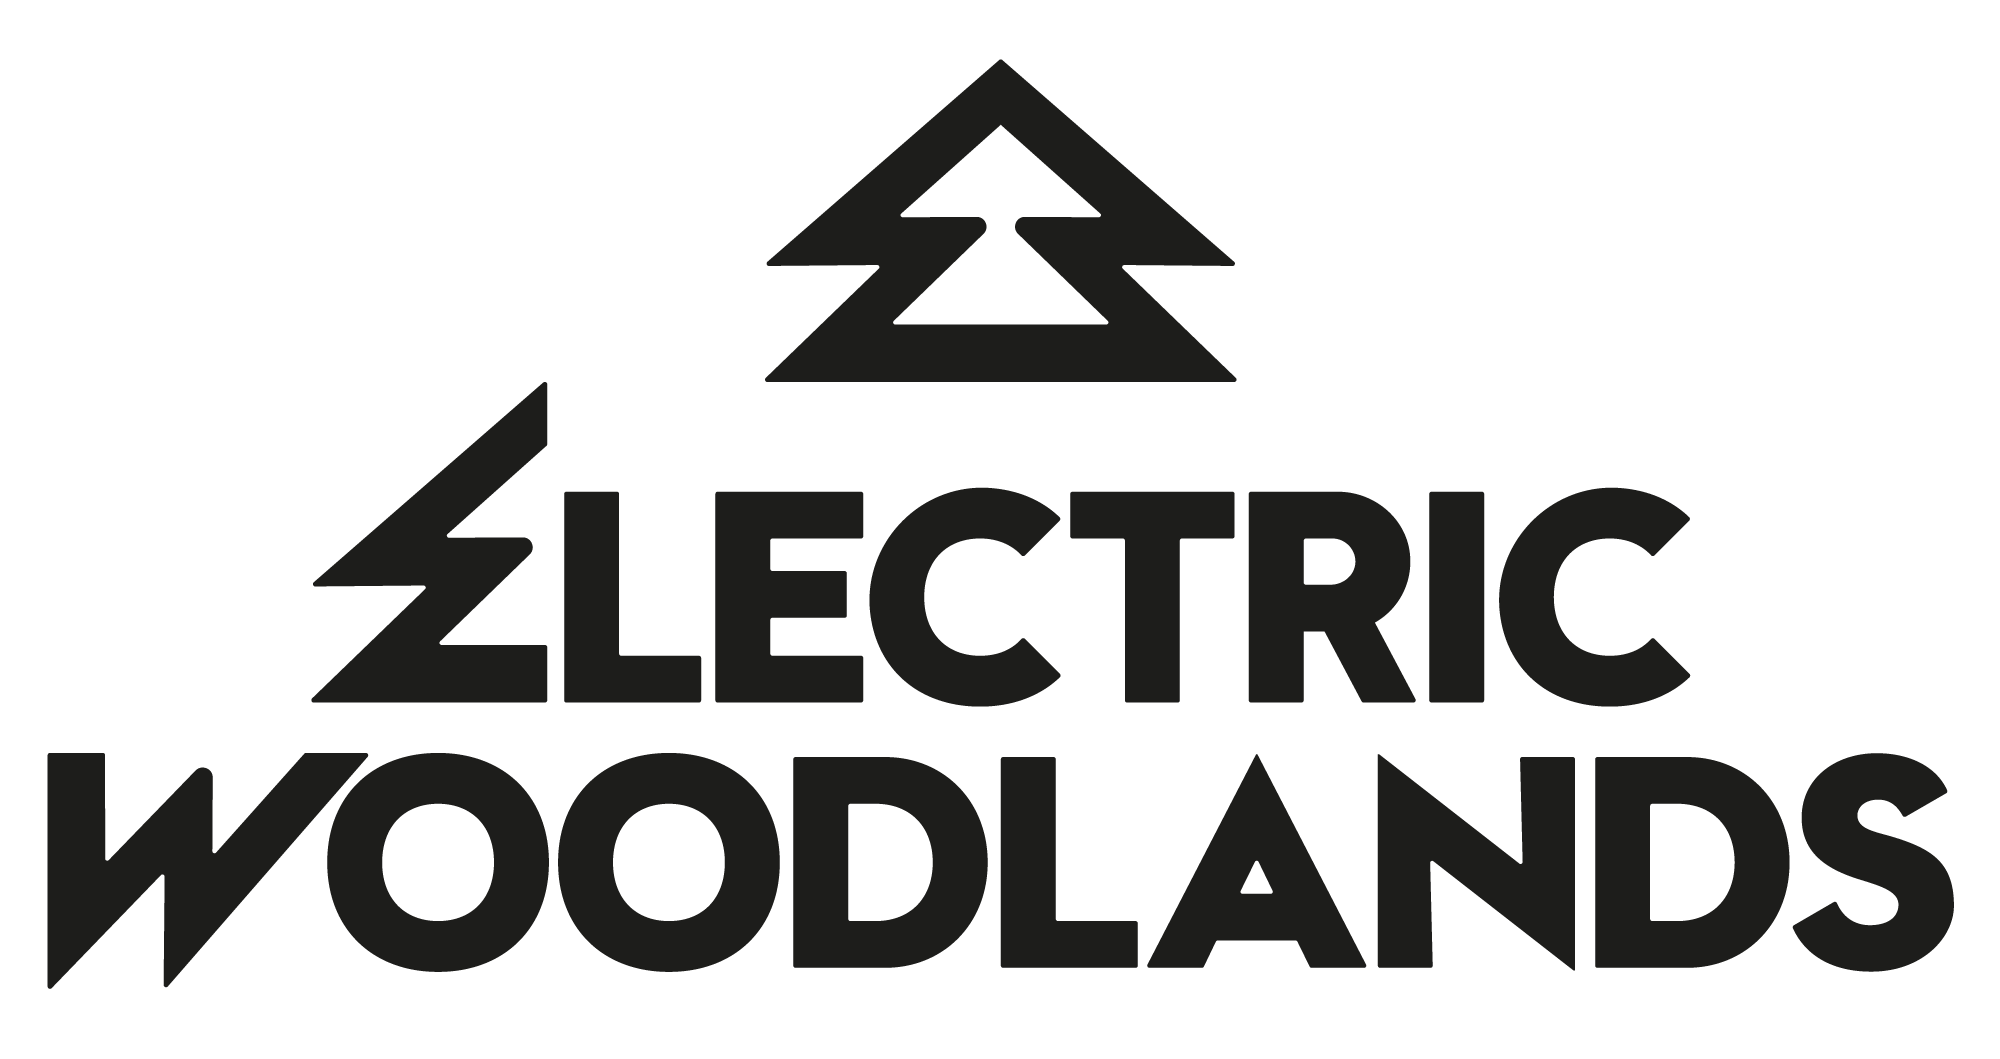 Electric Woodlands